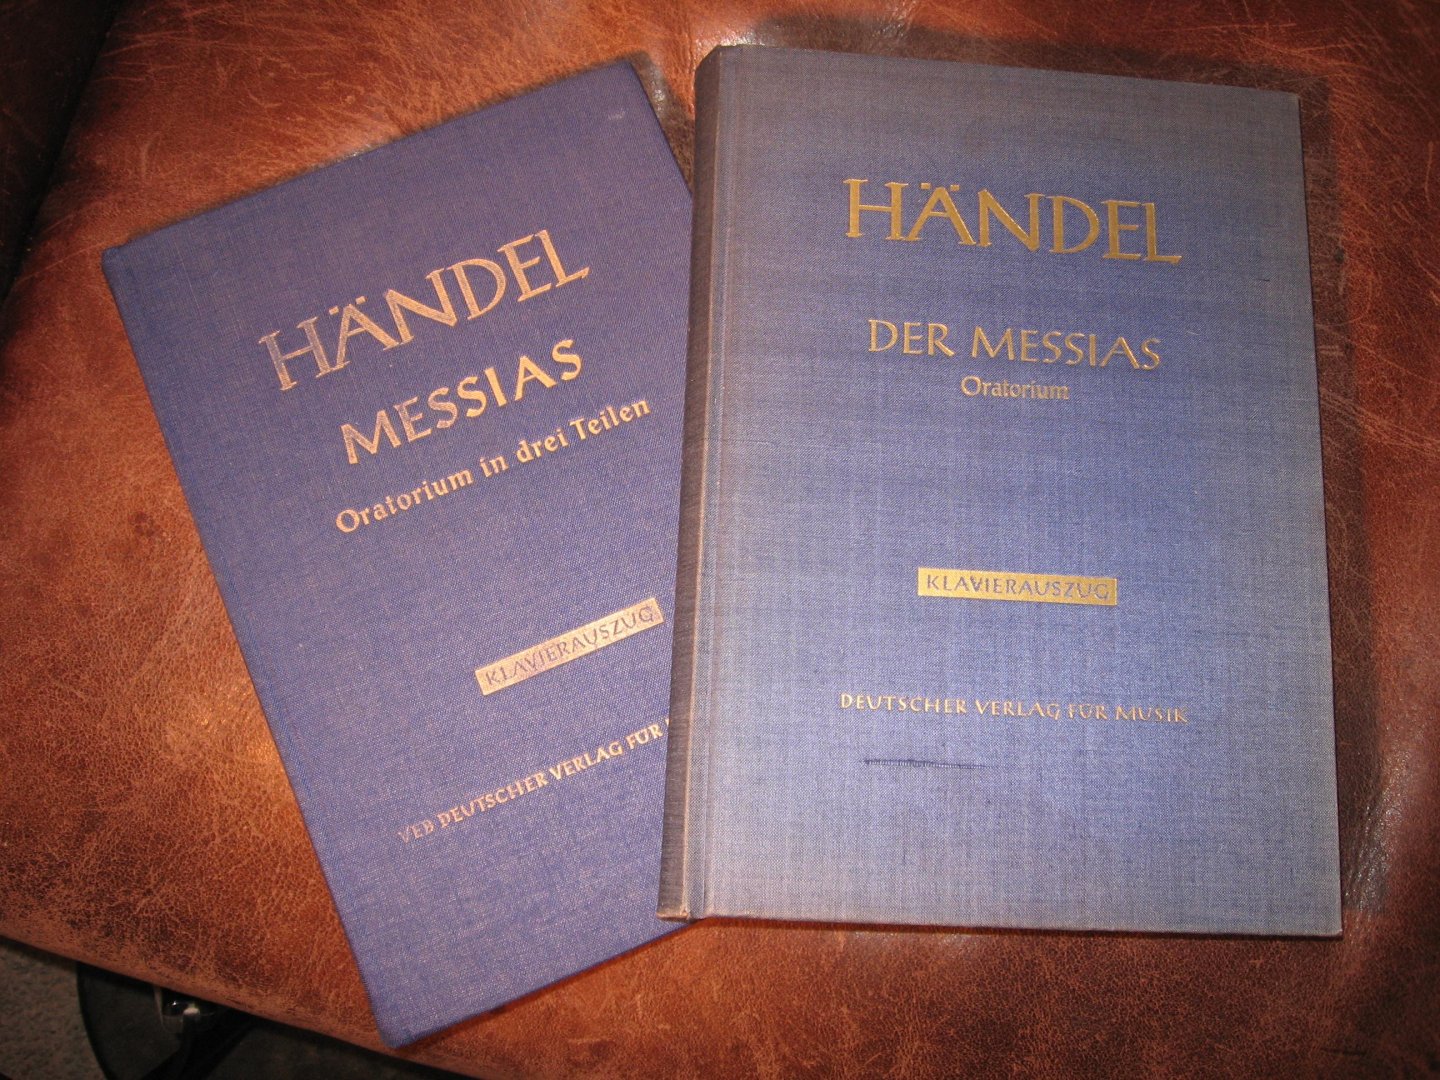 Handel, G.Fr. - Der Messias-Messiah. Oratorium-An Oratoria.